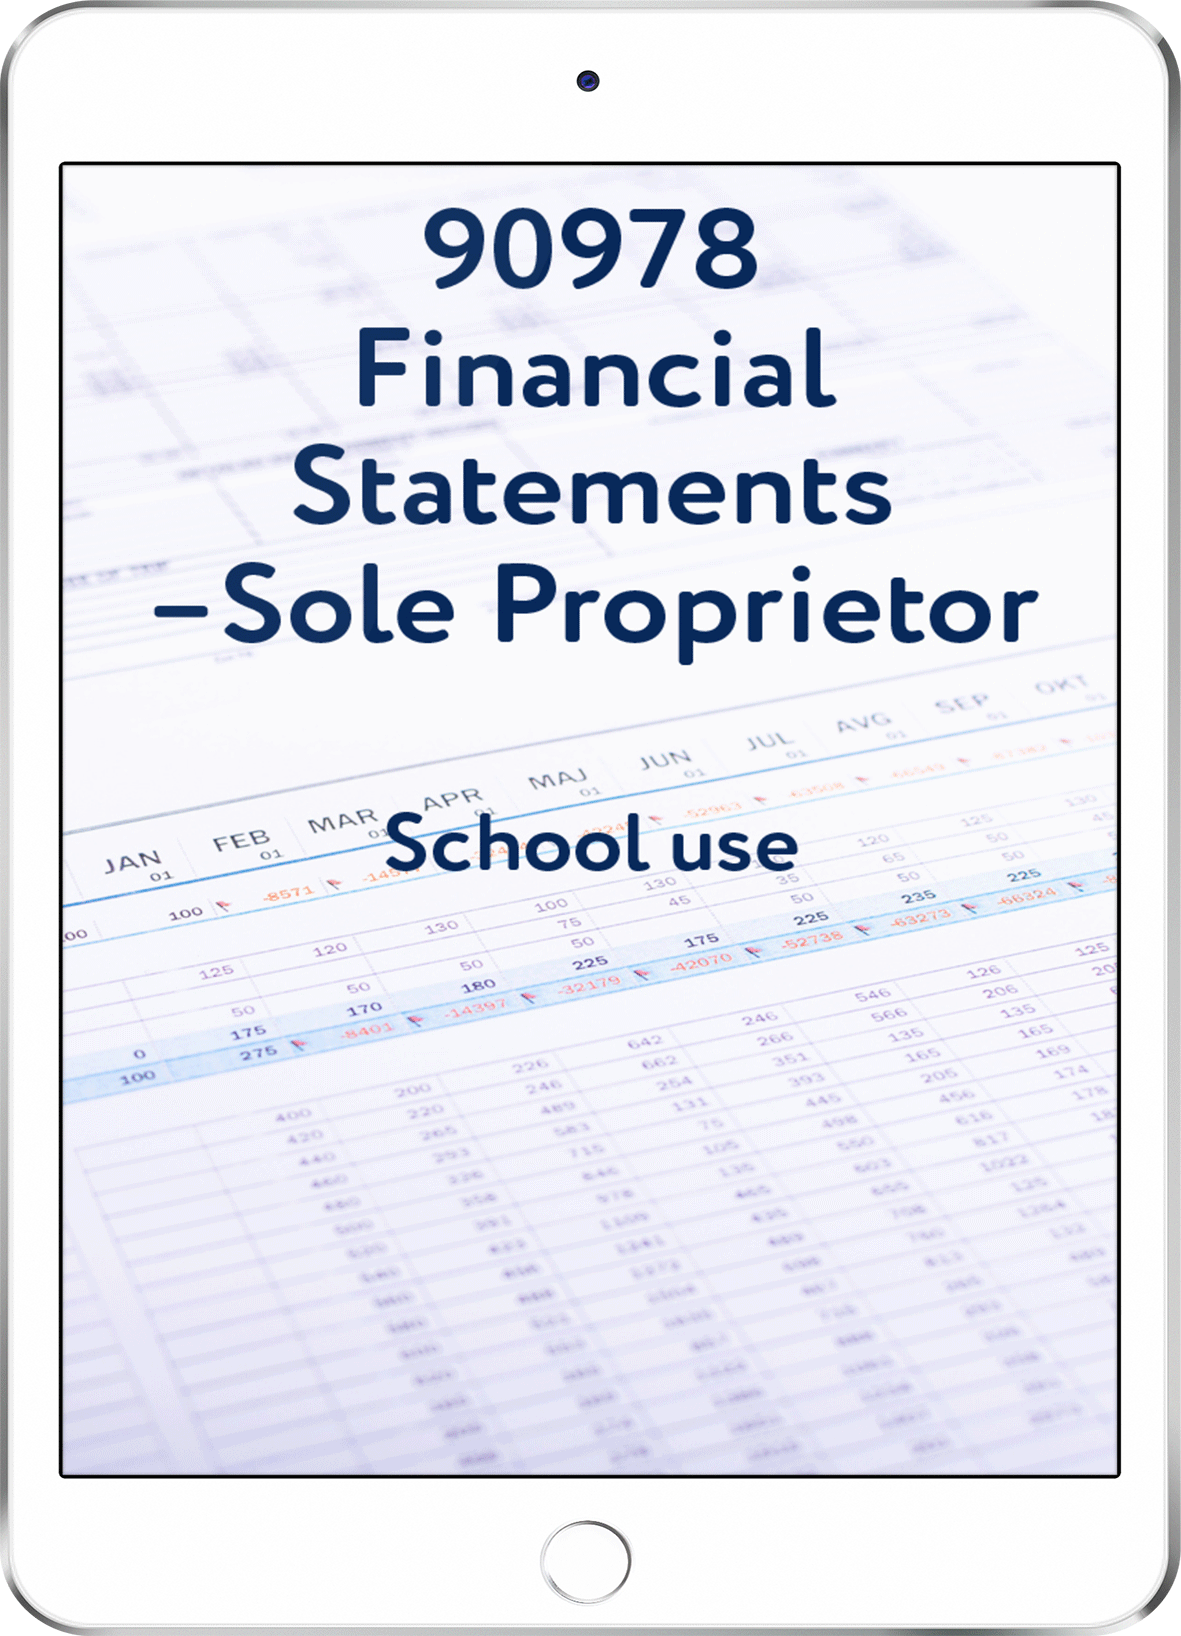 90978 Financial Statements - Sole Proprietor - School Use